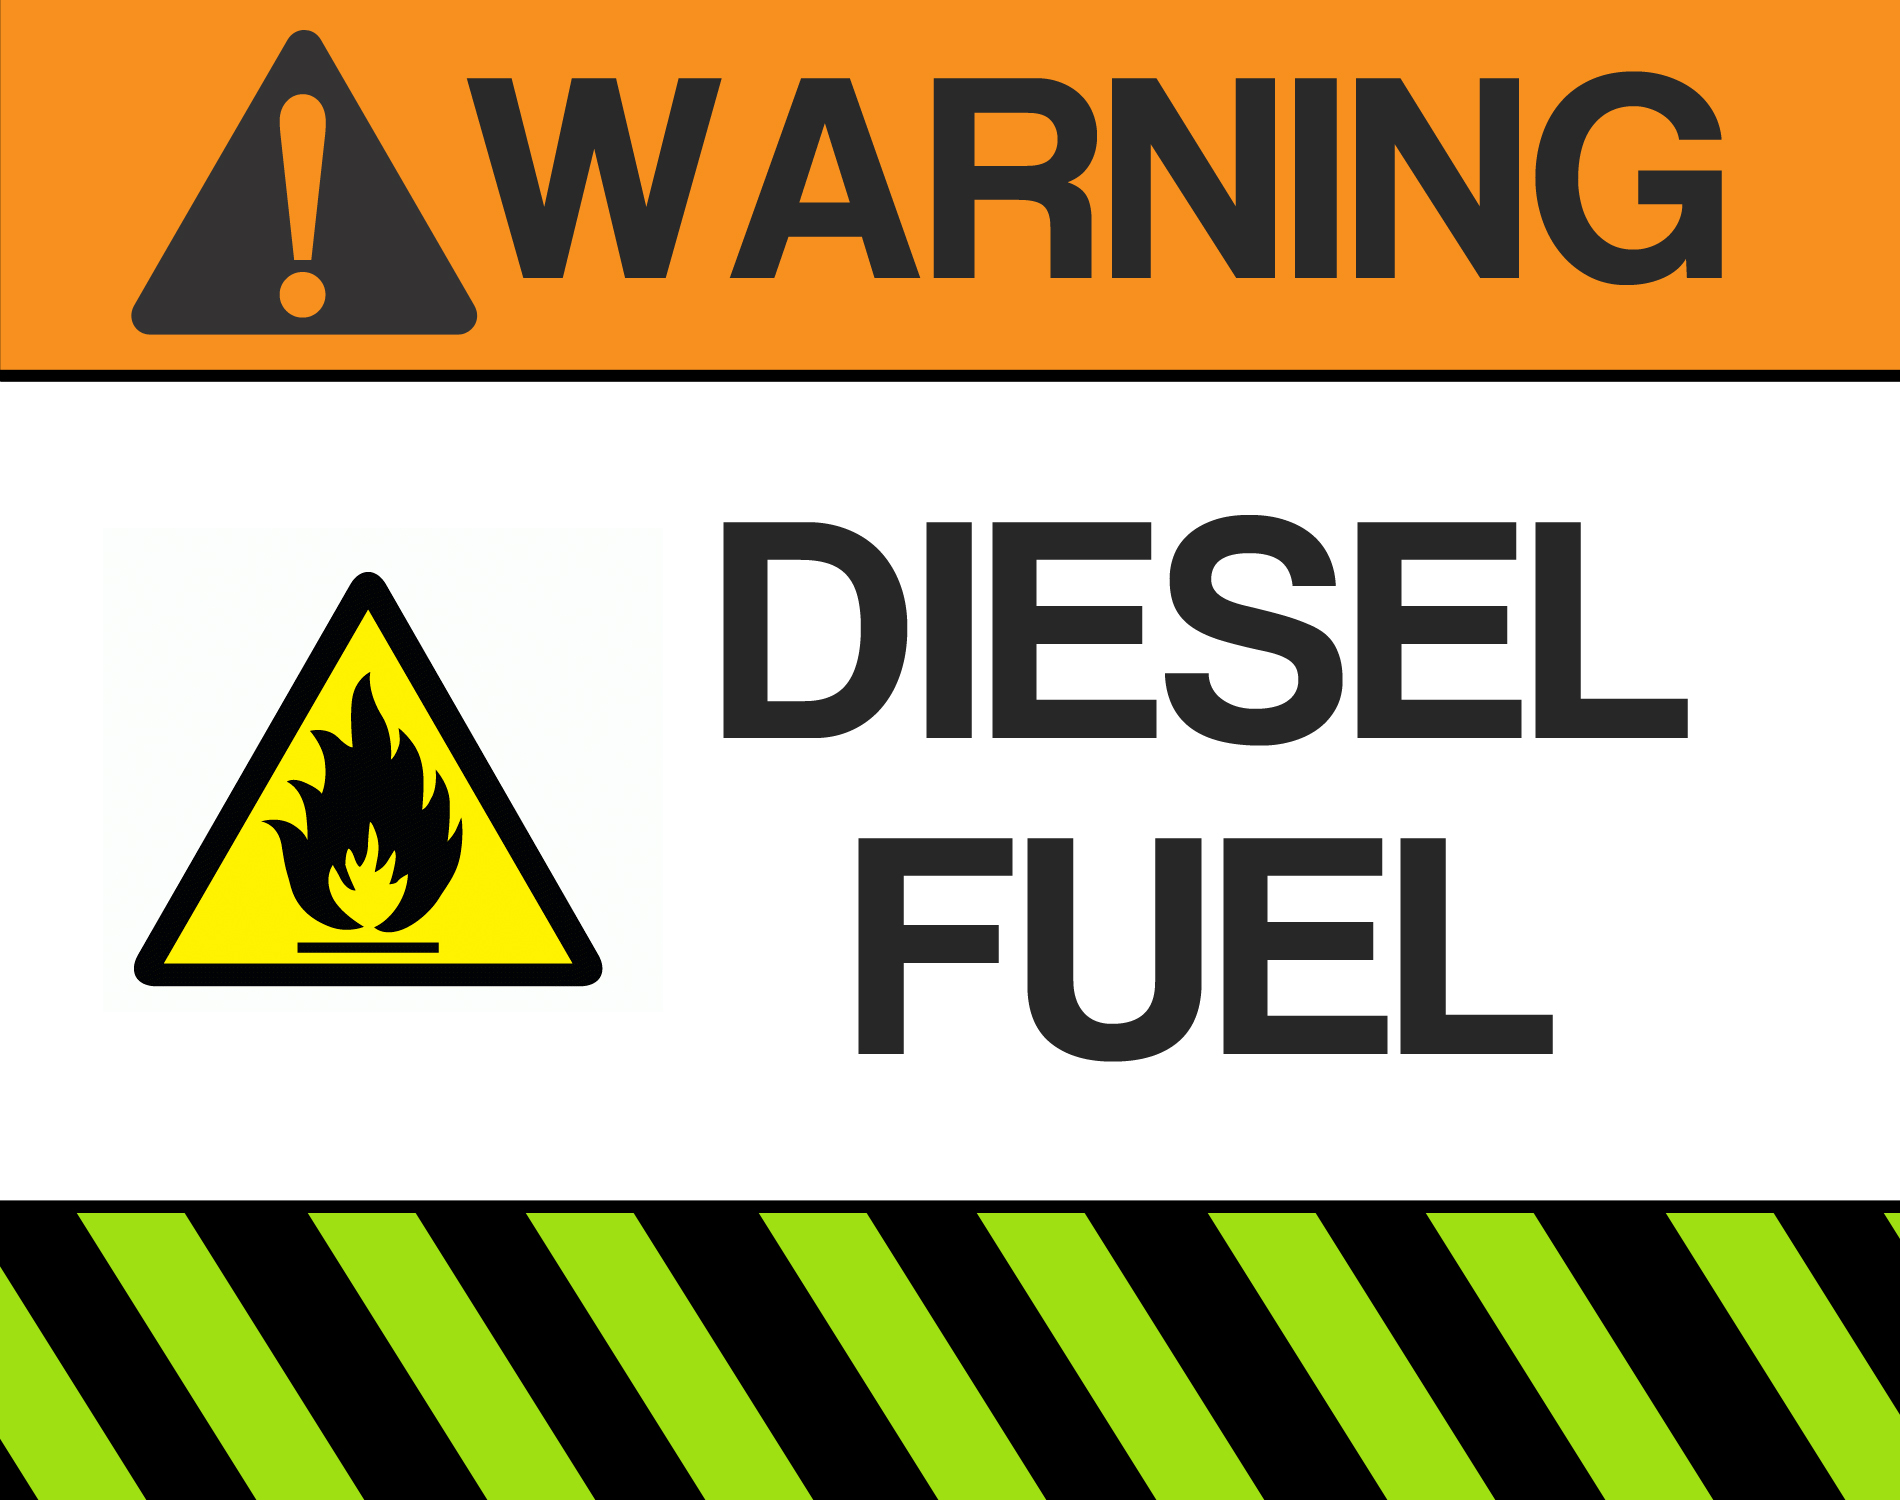 Warning Diesel Fuel Sign by Grevonet on DeviantArt